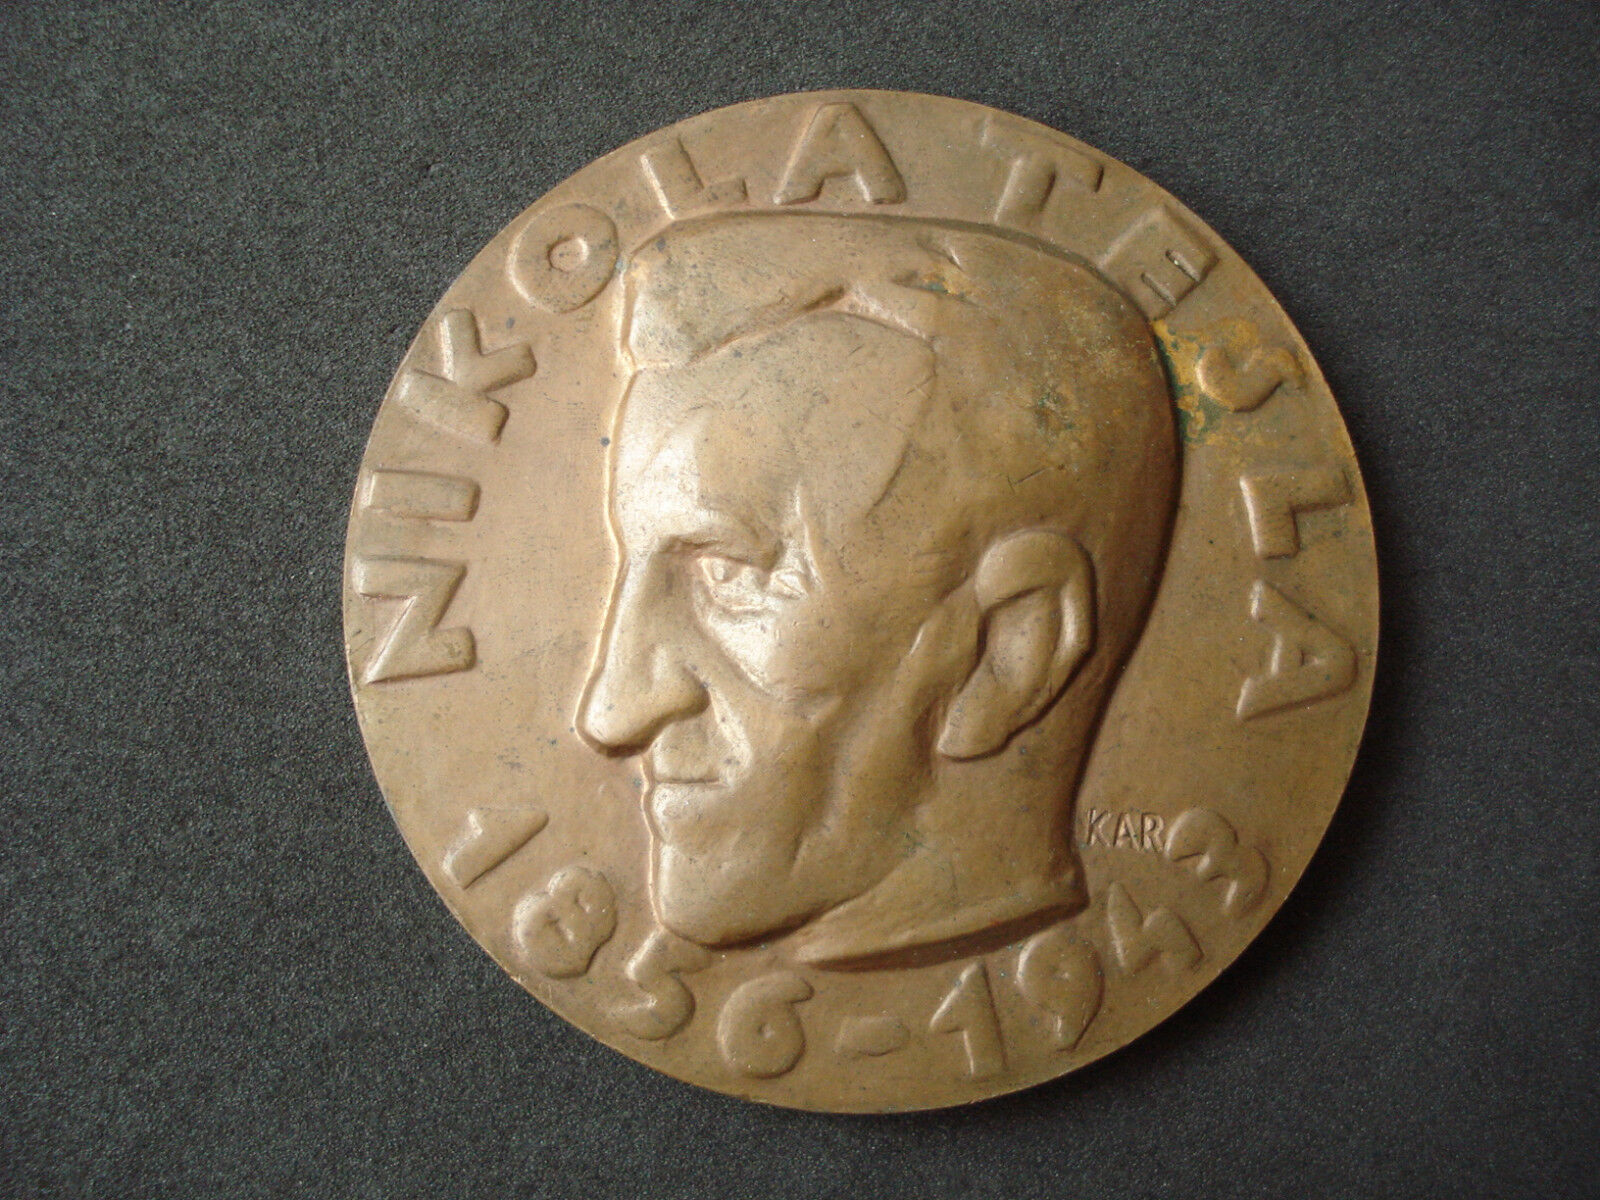 Nikola Tesla, signed plaque / medal, 20 years of labour, Zagreb